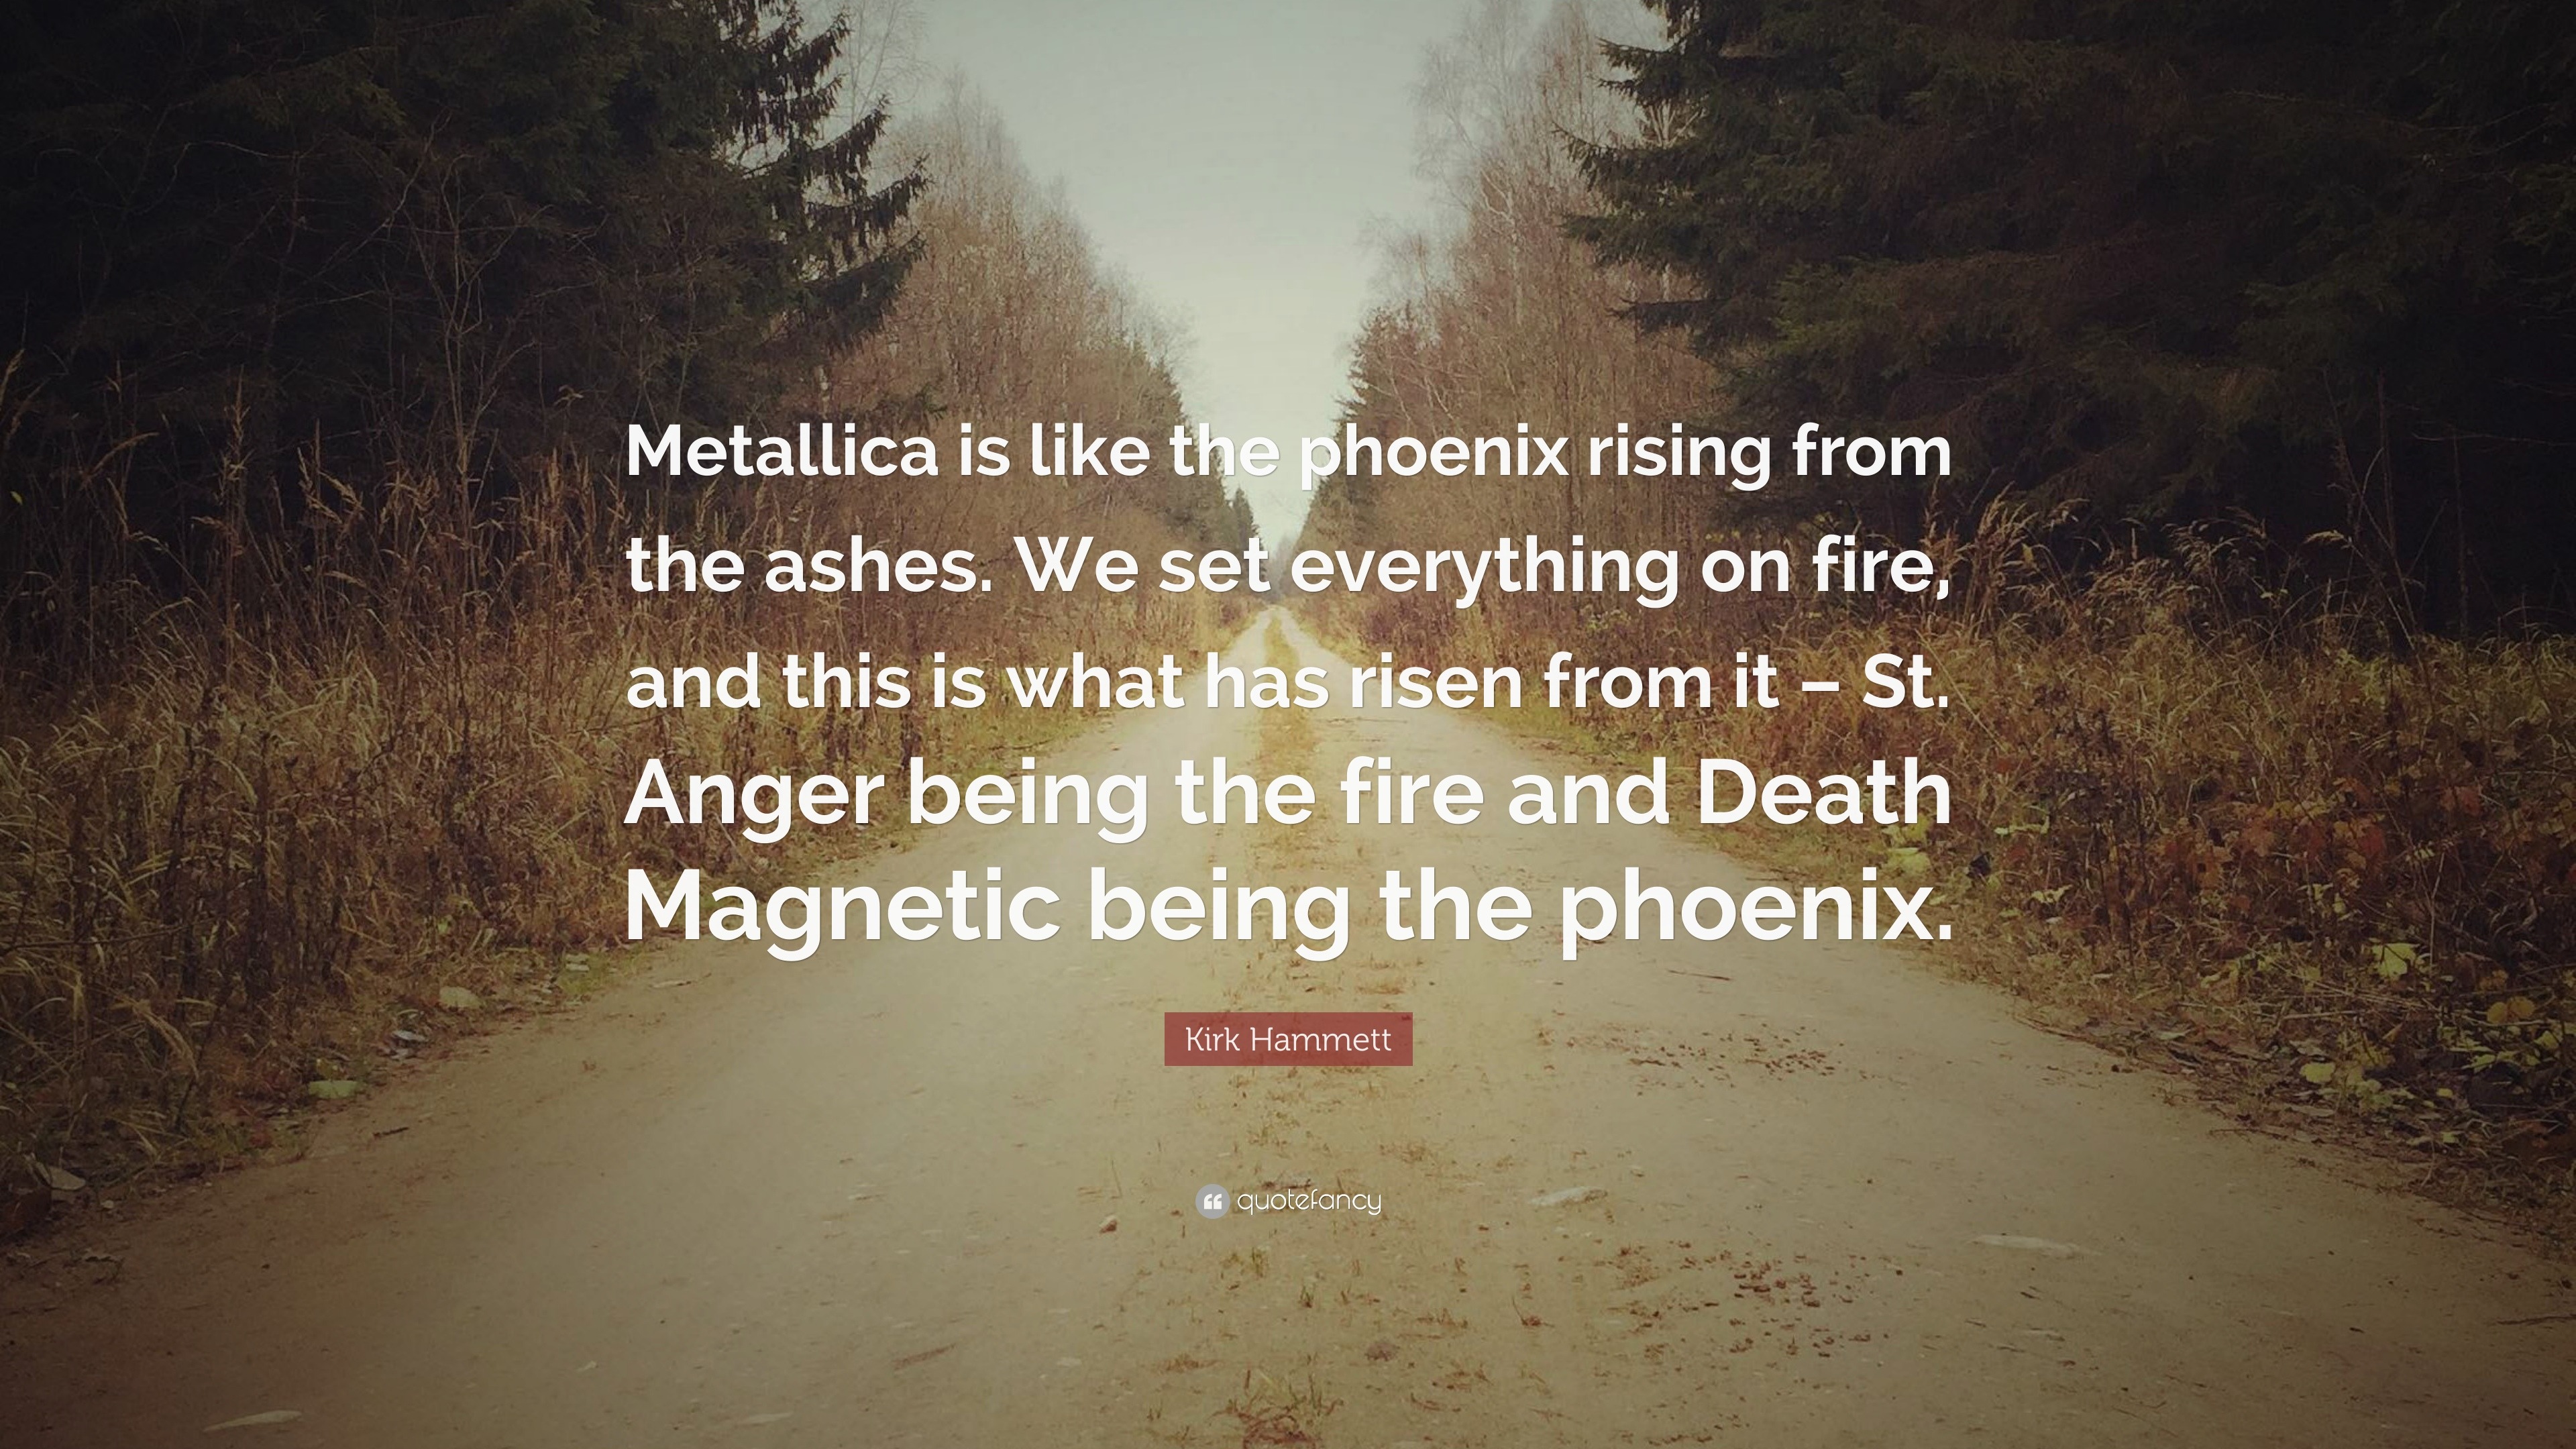 Kirk Hammett Quote “Metallica is like the phoenix rising